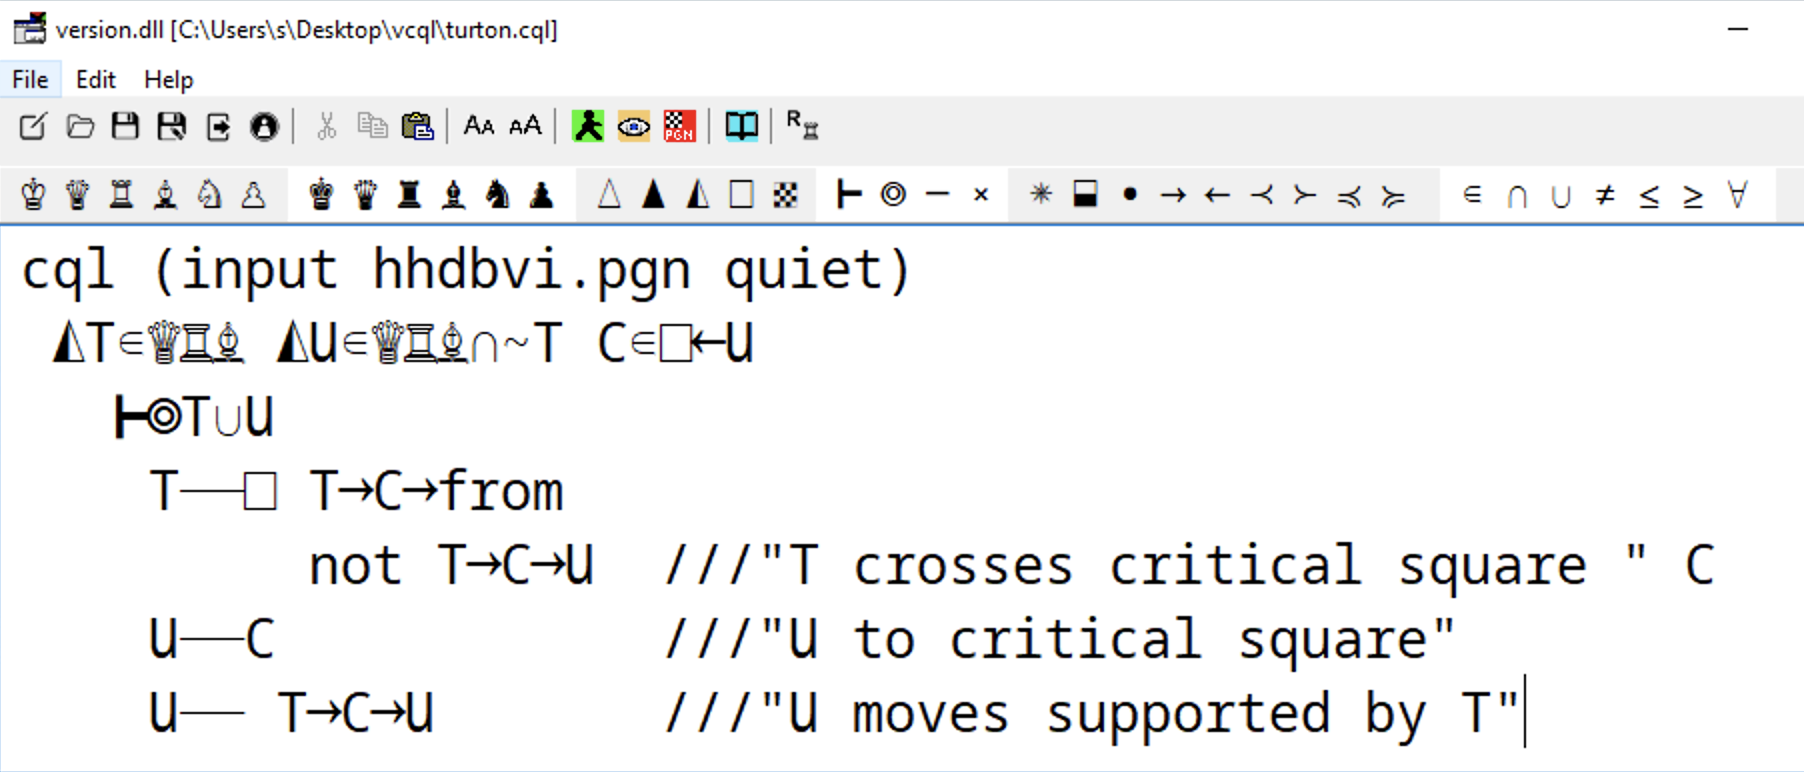 VisualCQL editor screenshot